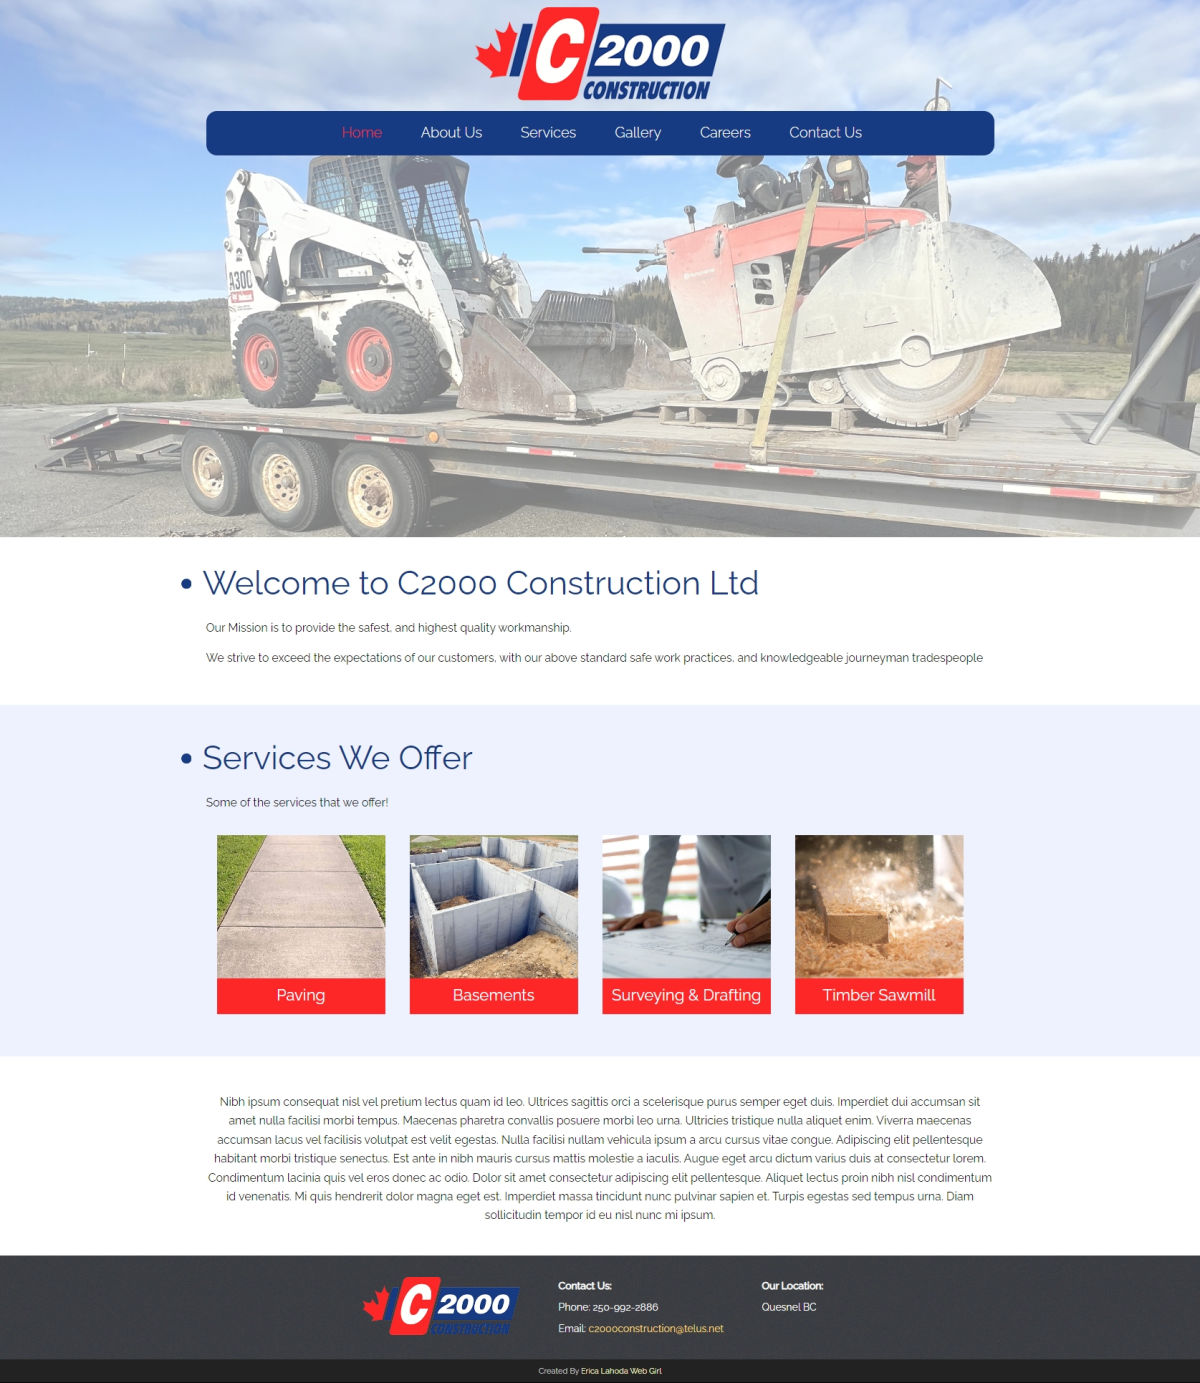 C2000 Construction Ltd